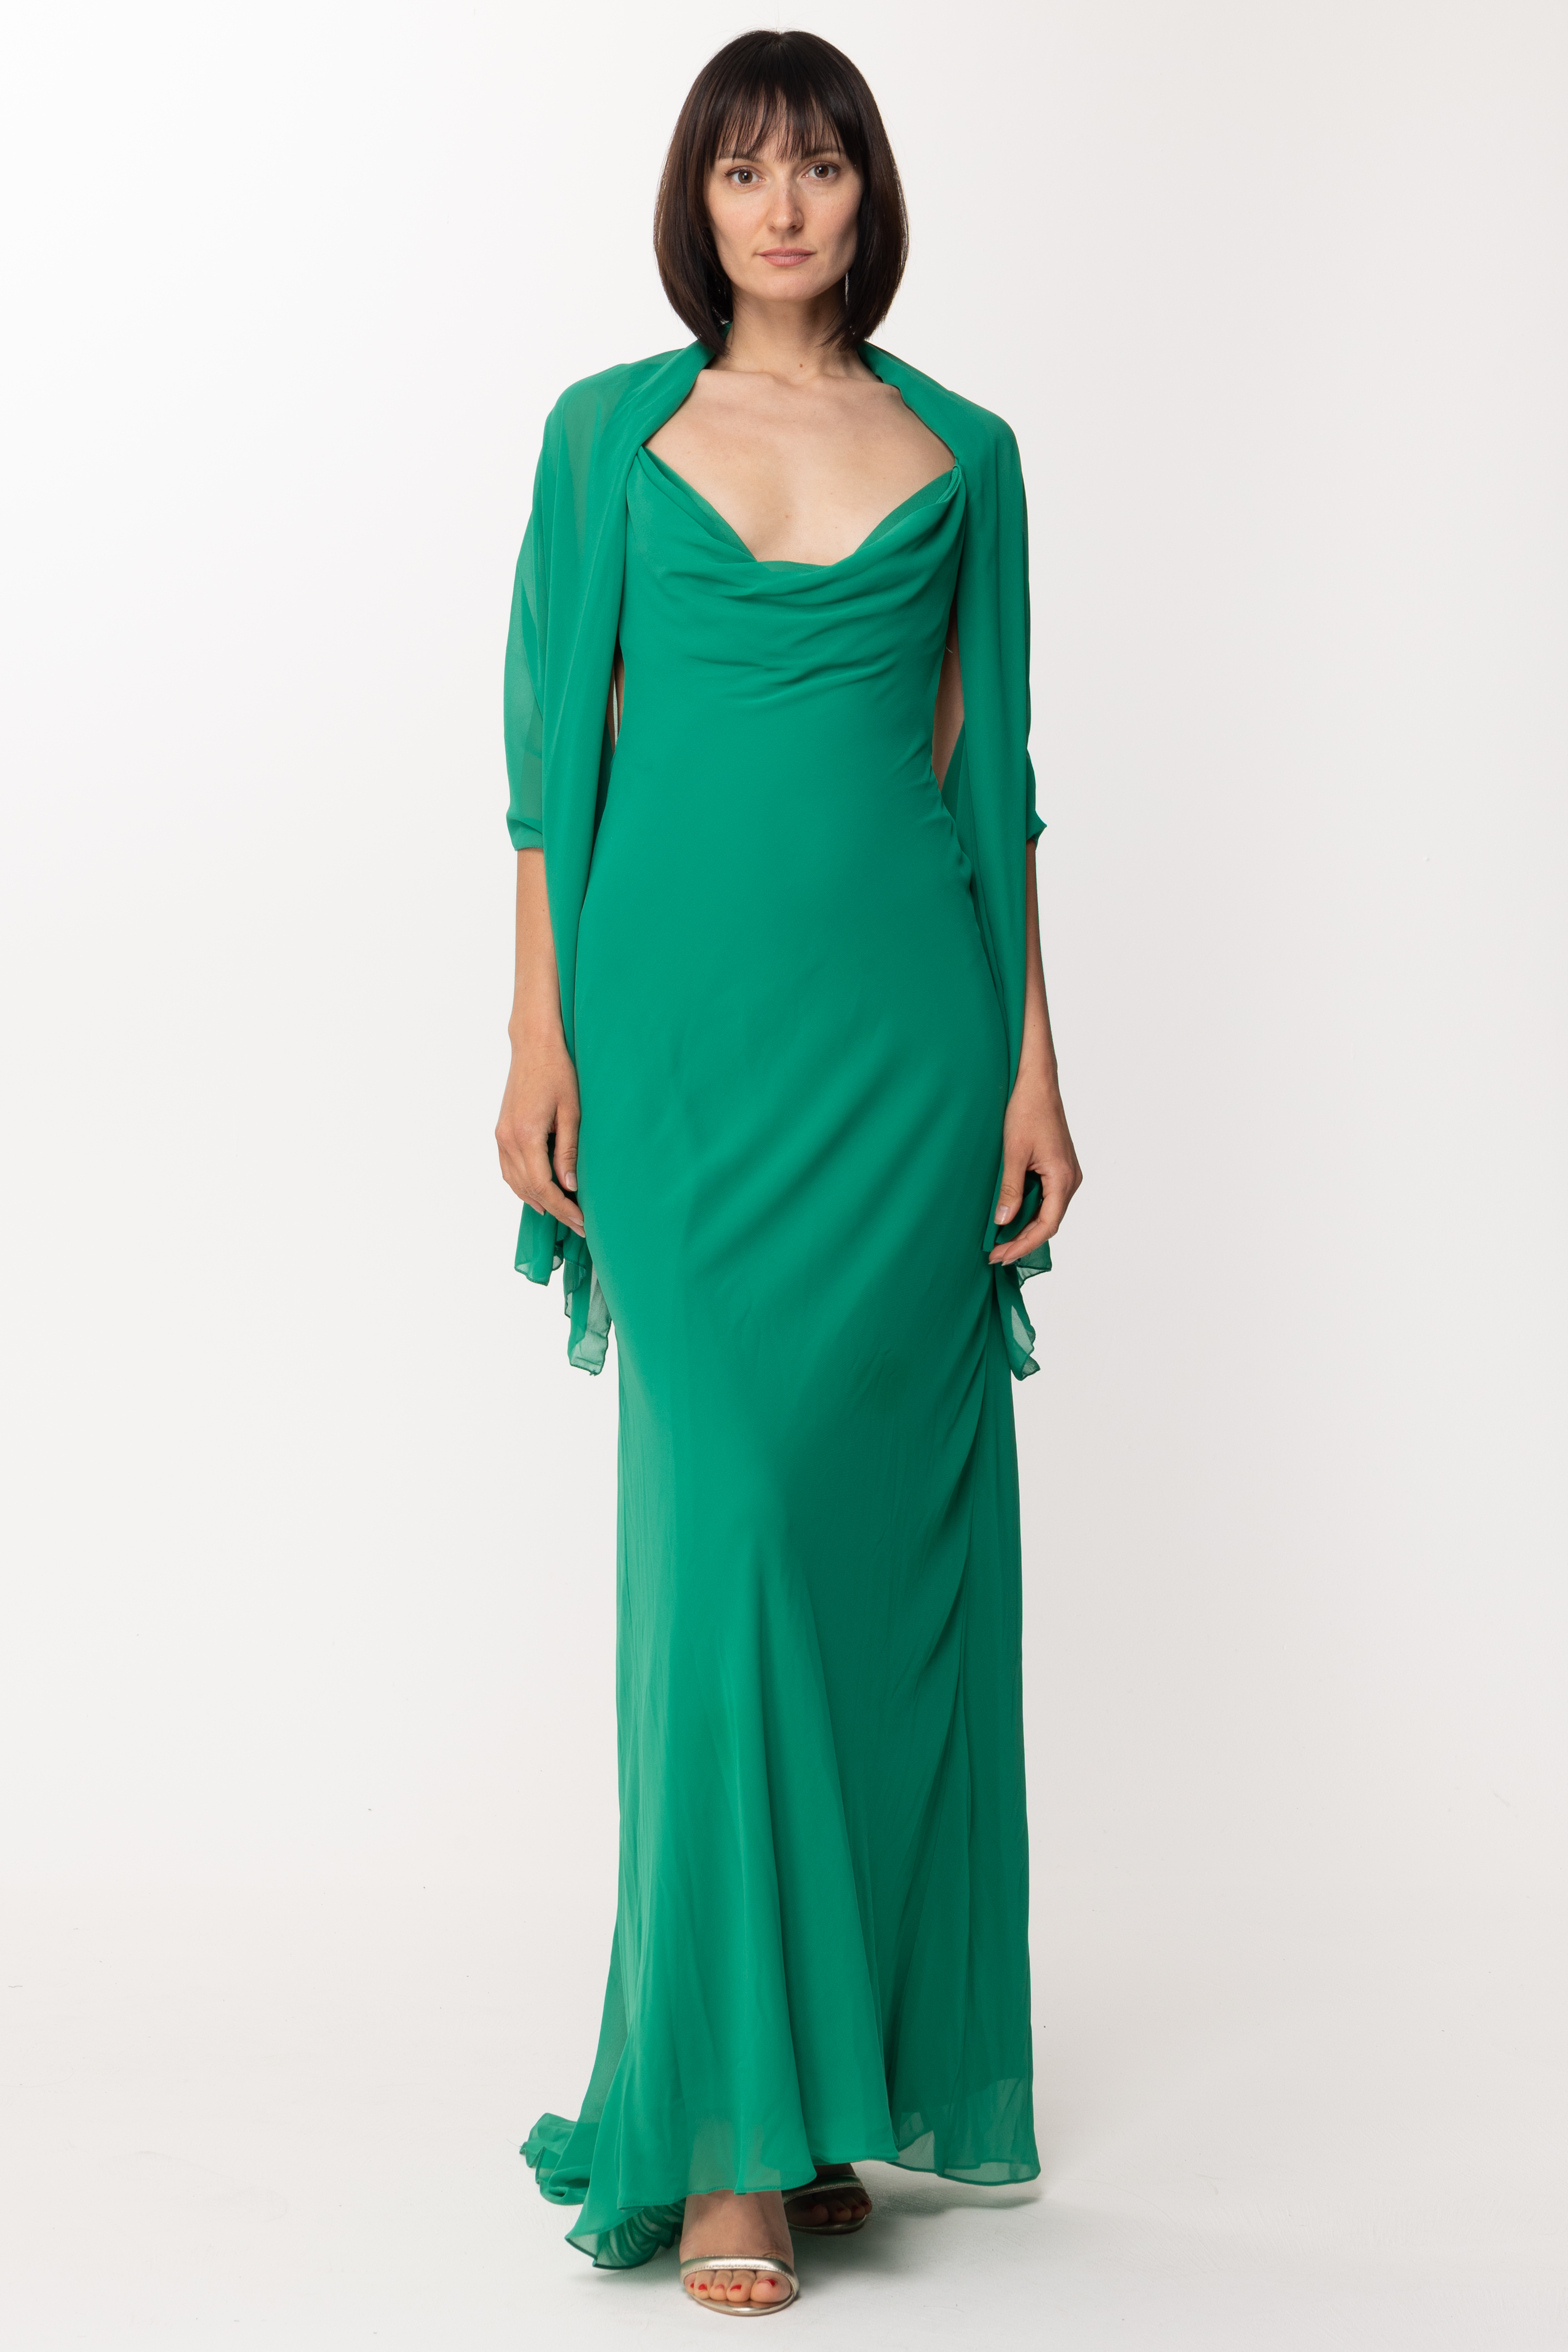 Podgląd: Fabiana Ferri Długa rozkloszowana sukienka Verde